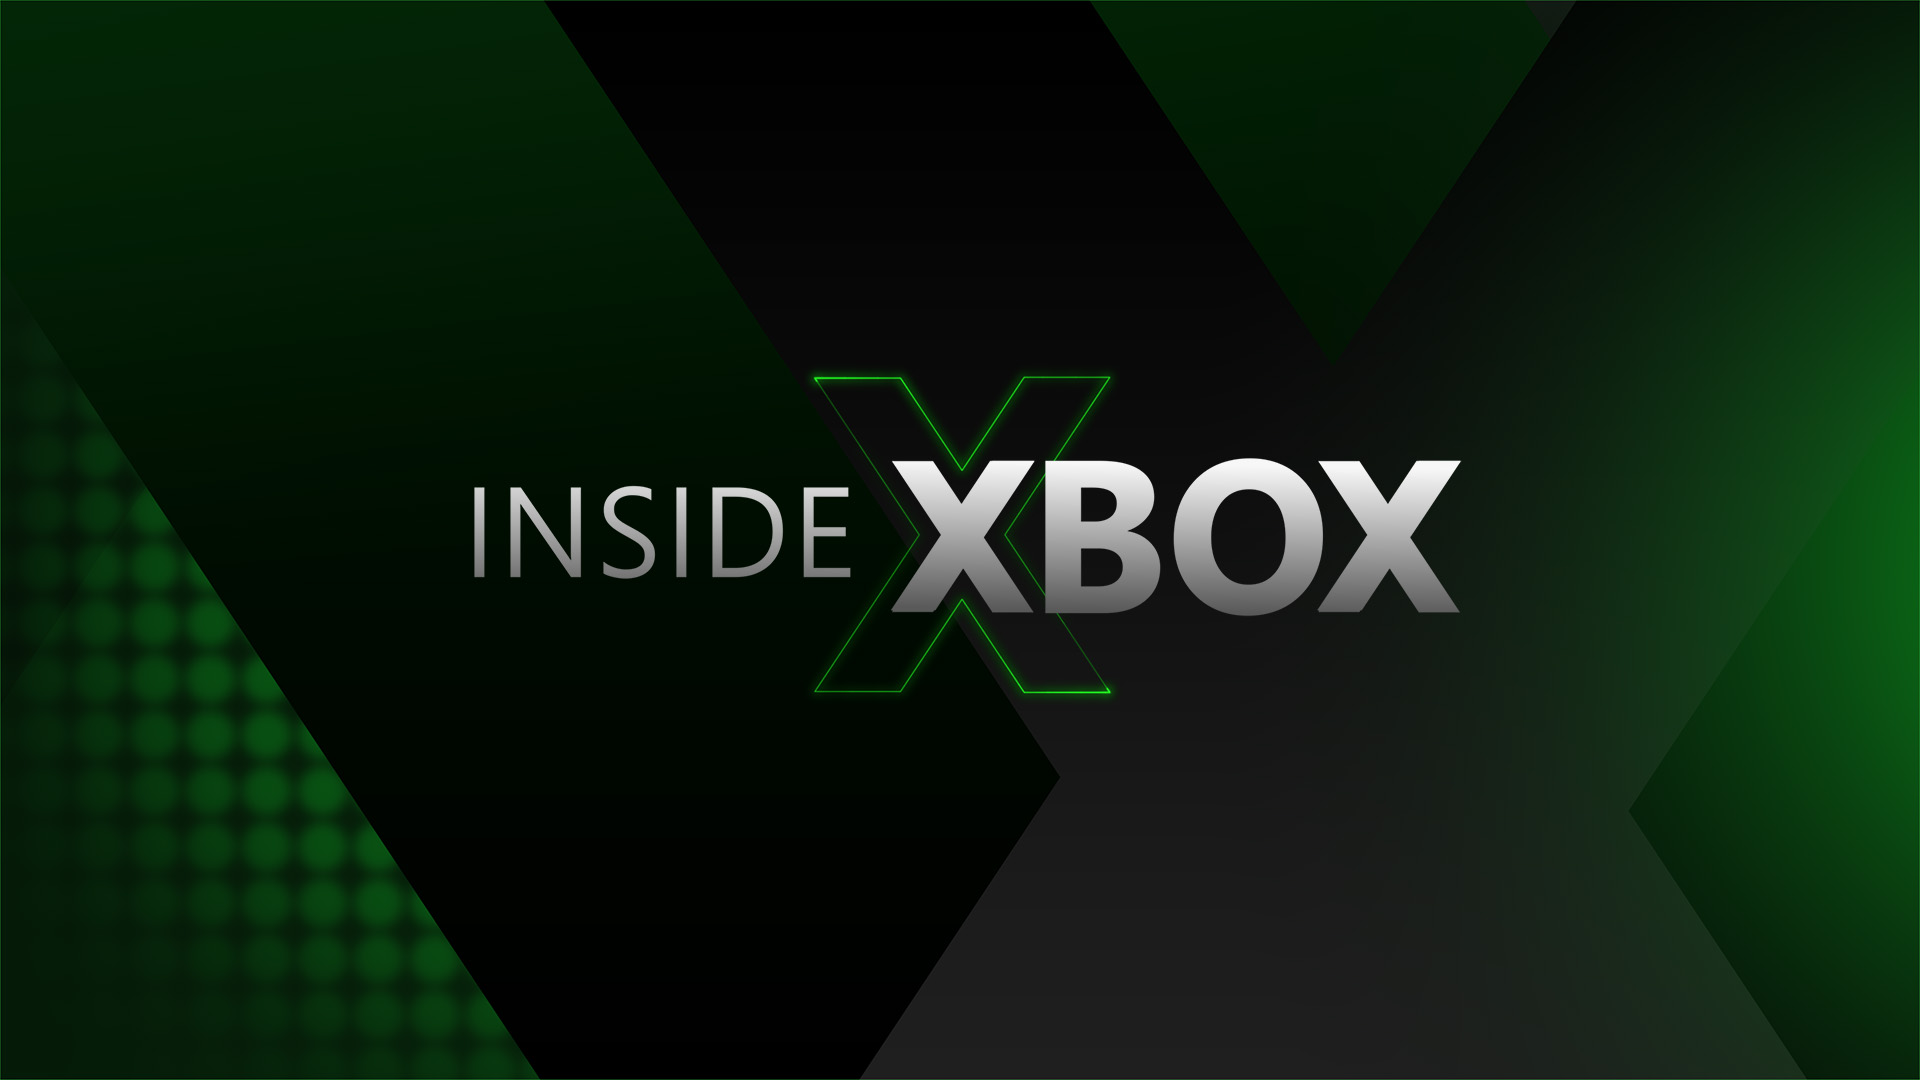 Inside the Xbox Hero image